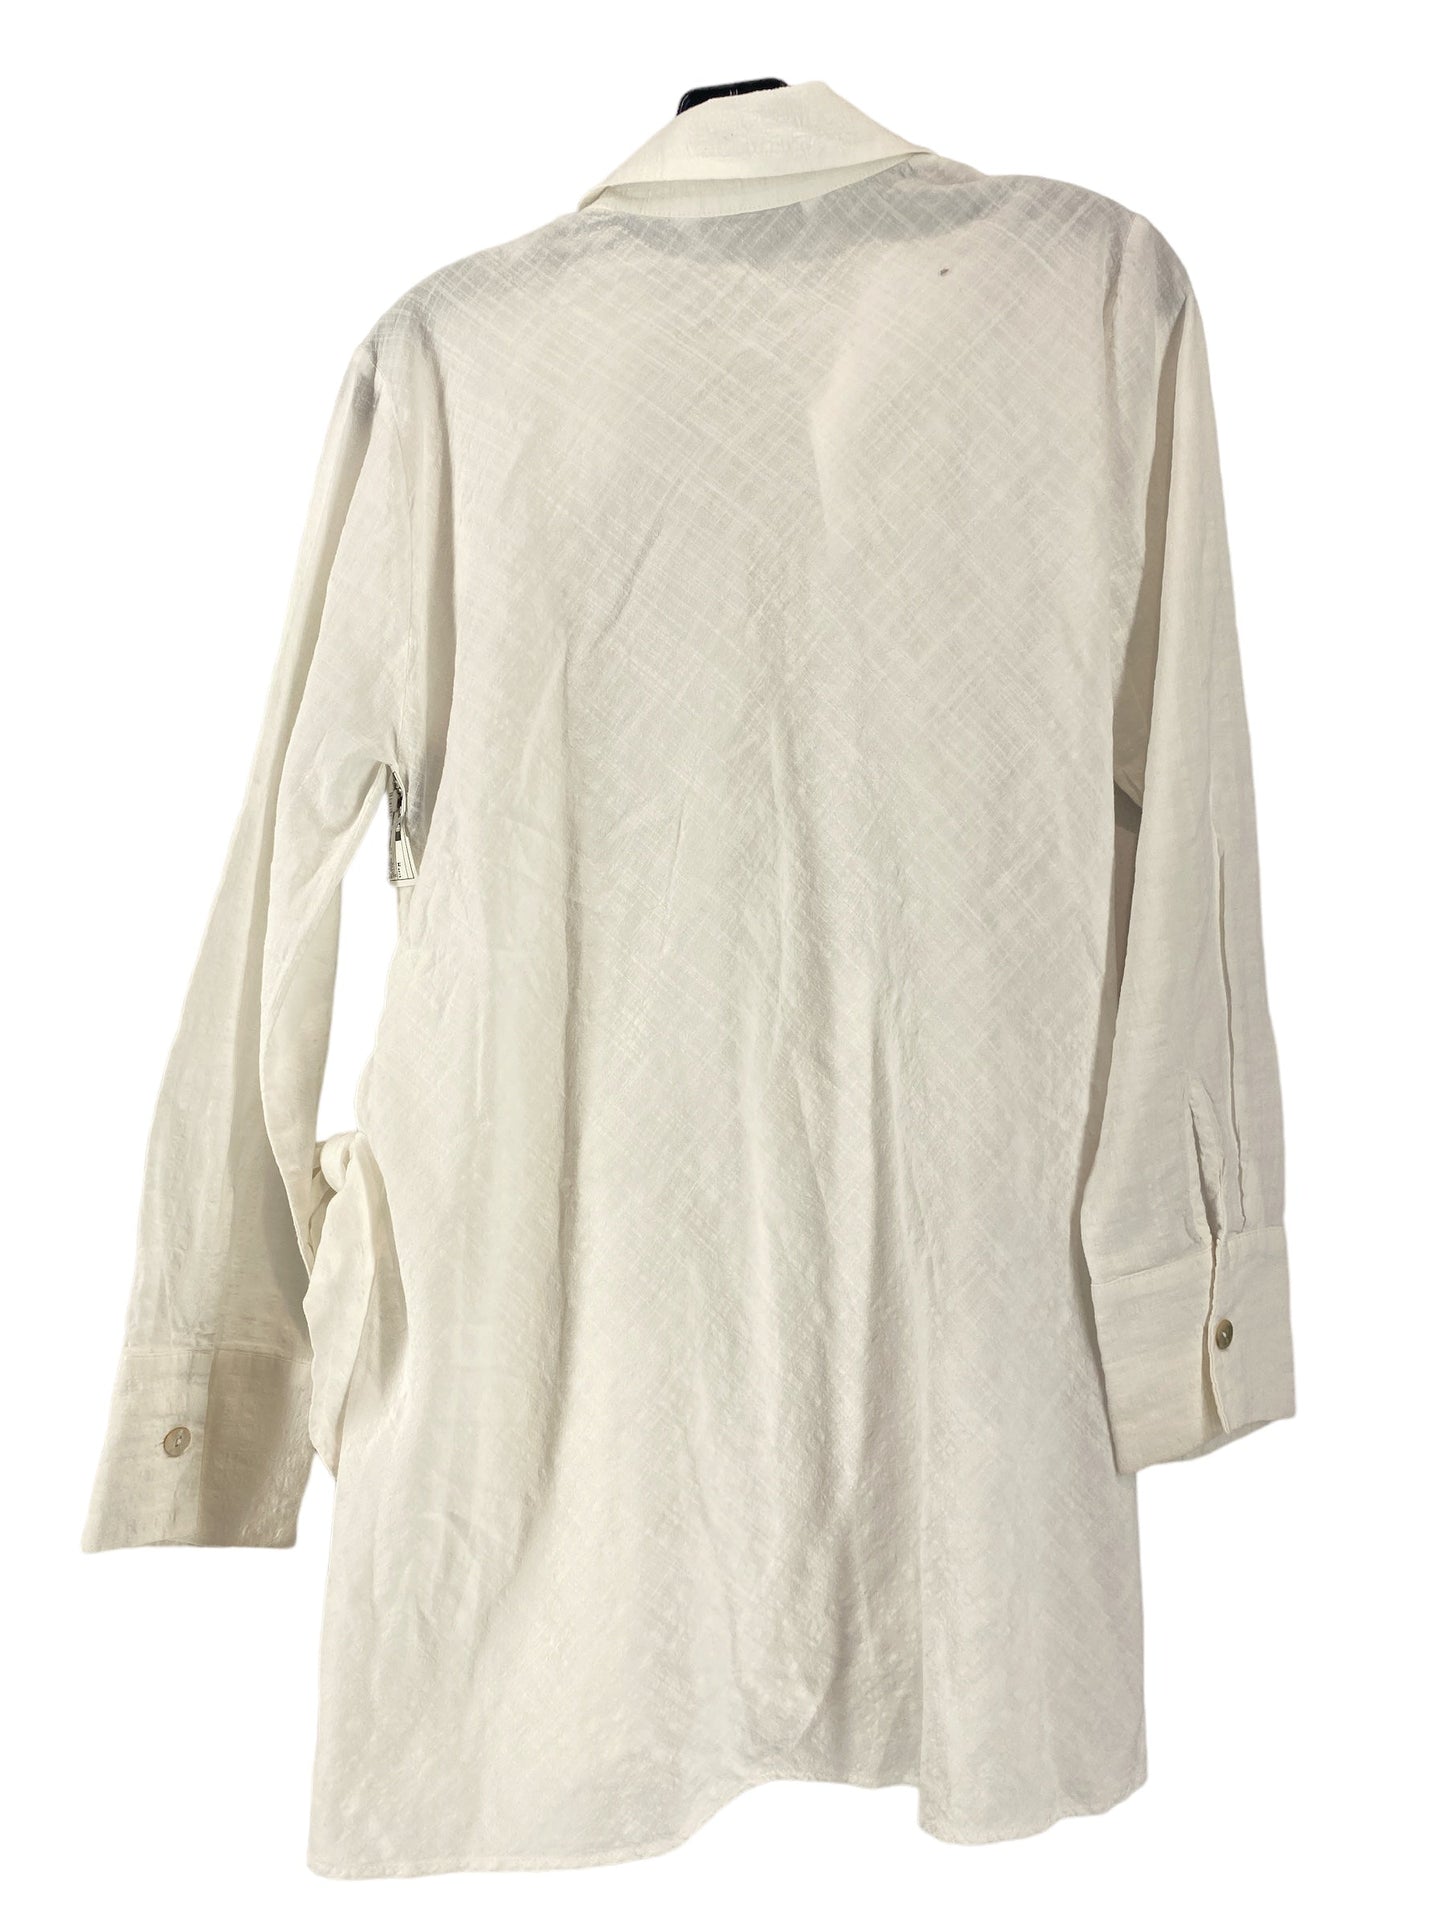 Blouse Long Sleeve By Zara  Size: M